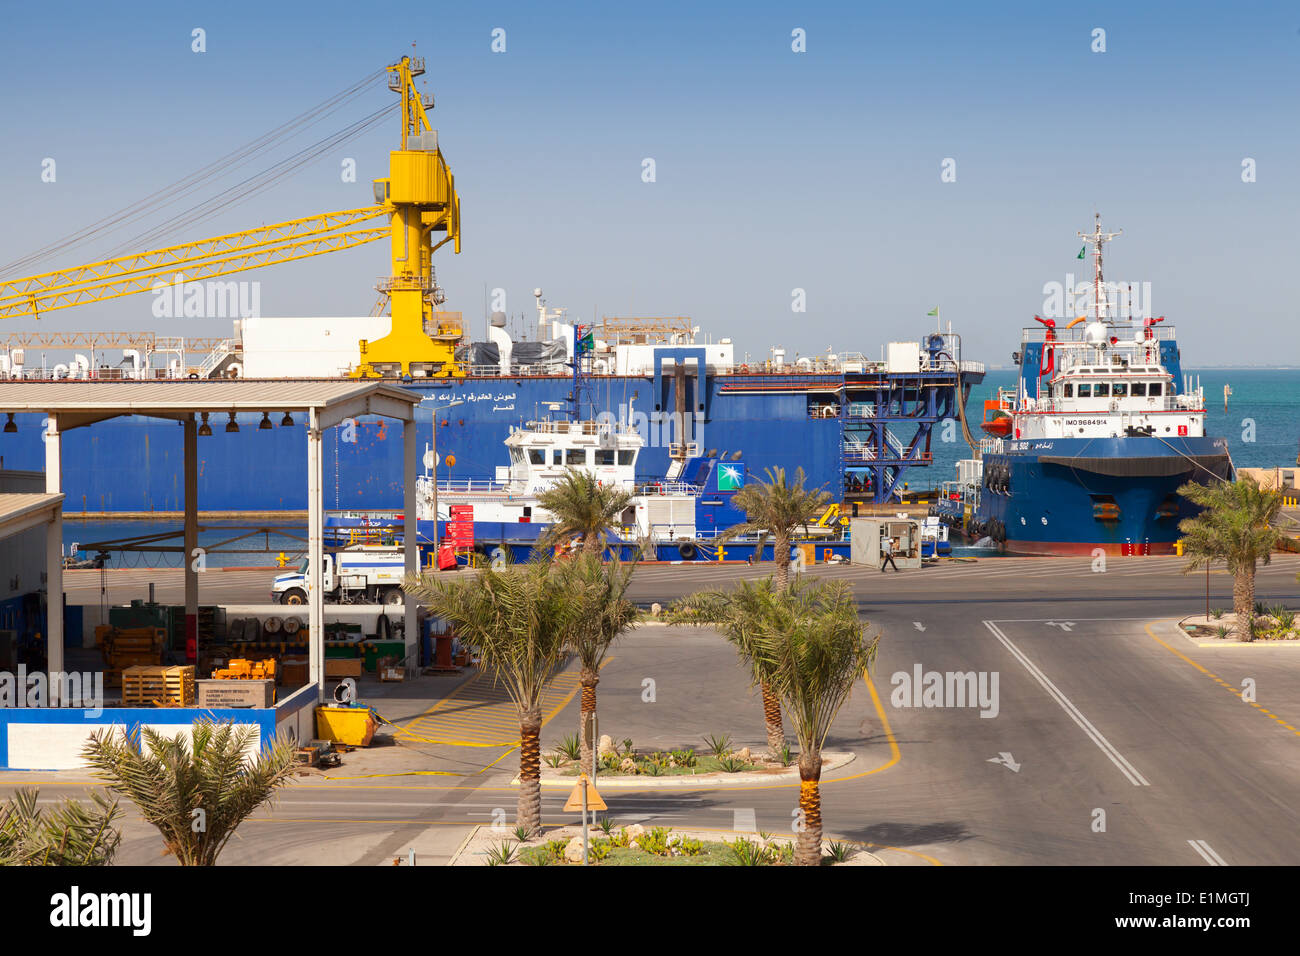 RAS TANURA, SAUDI ARABIA - MAY 14, 2014: Port view with moored ships, Saudi Arabia Stock Photo